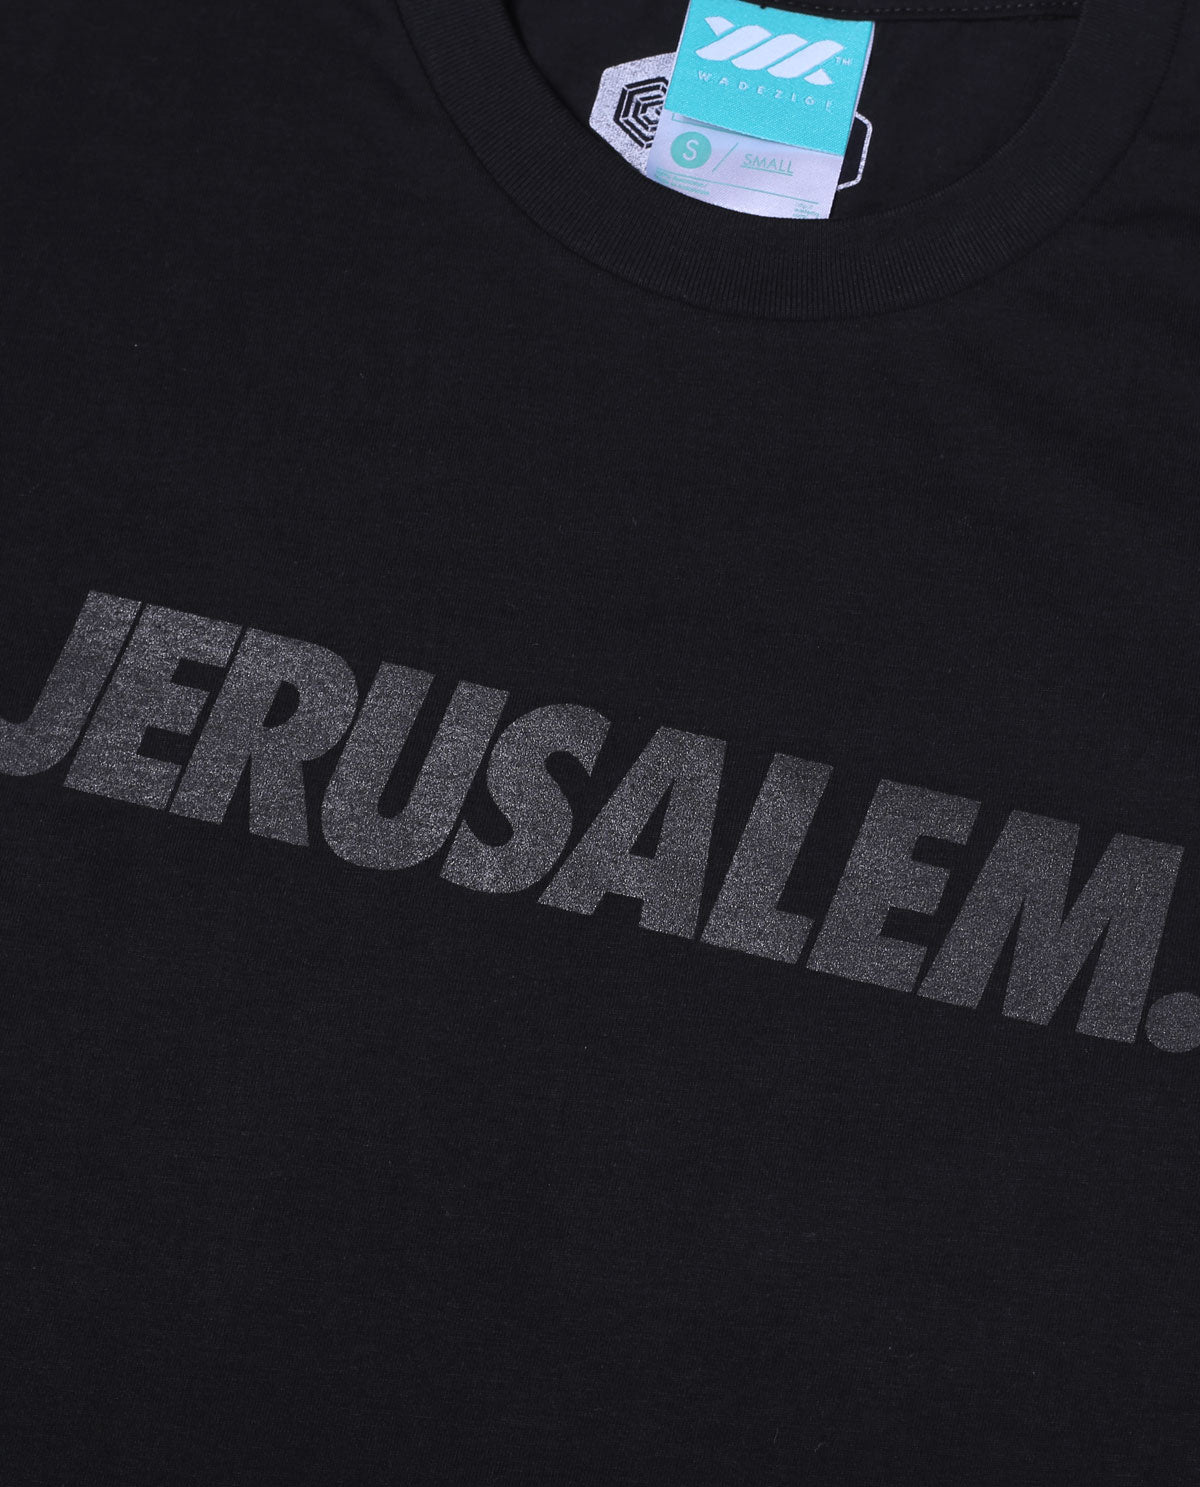 WADEZIG! T-SHIRT - JERUSALEM BLACK ON BLACK #4